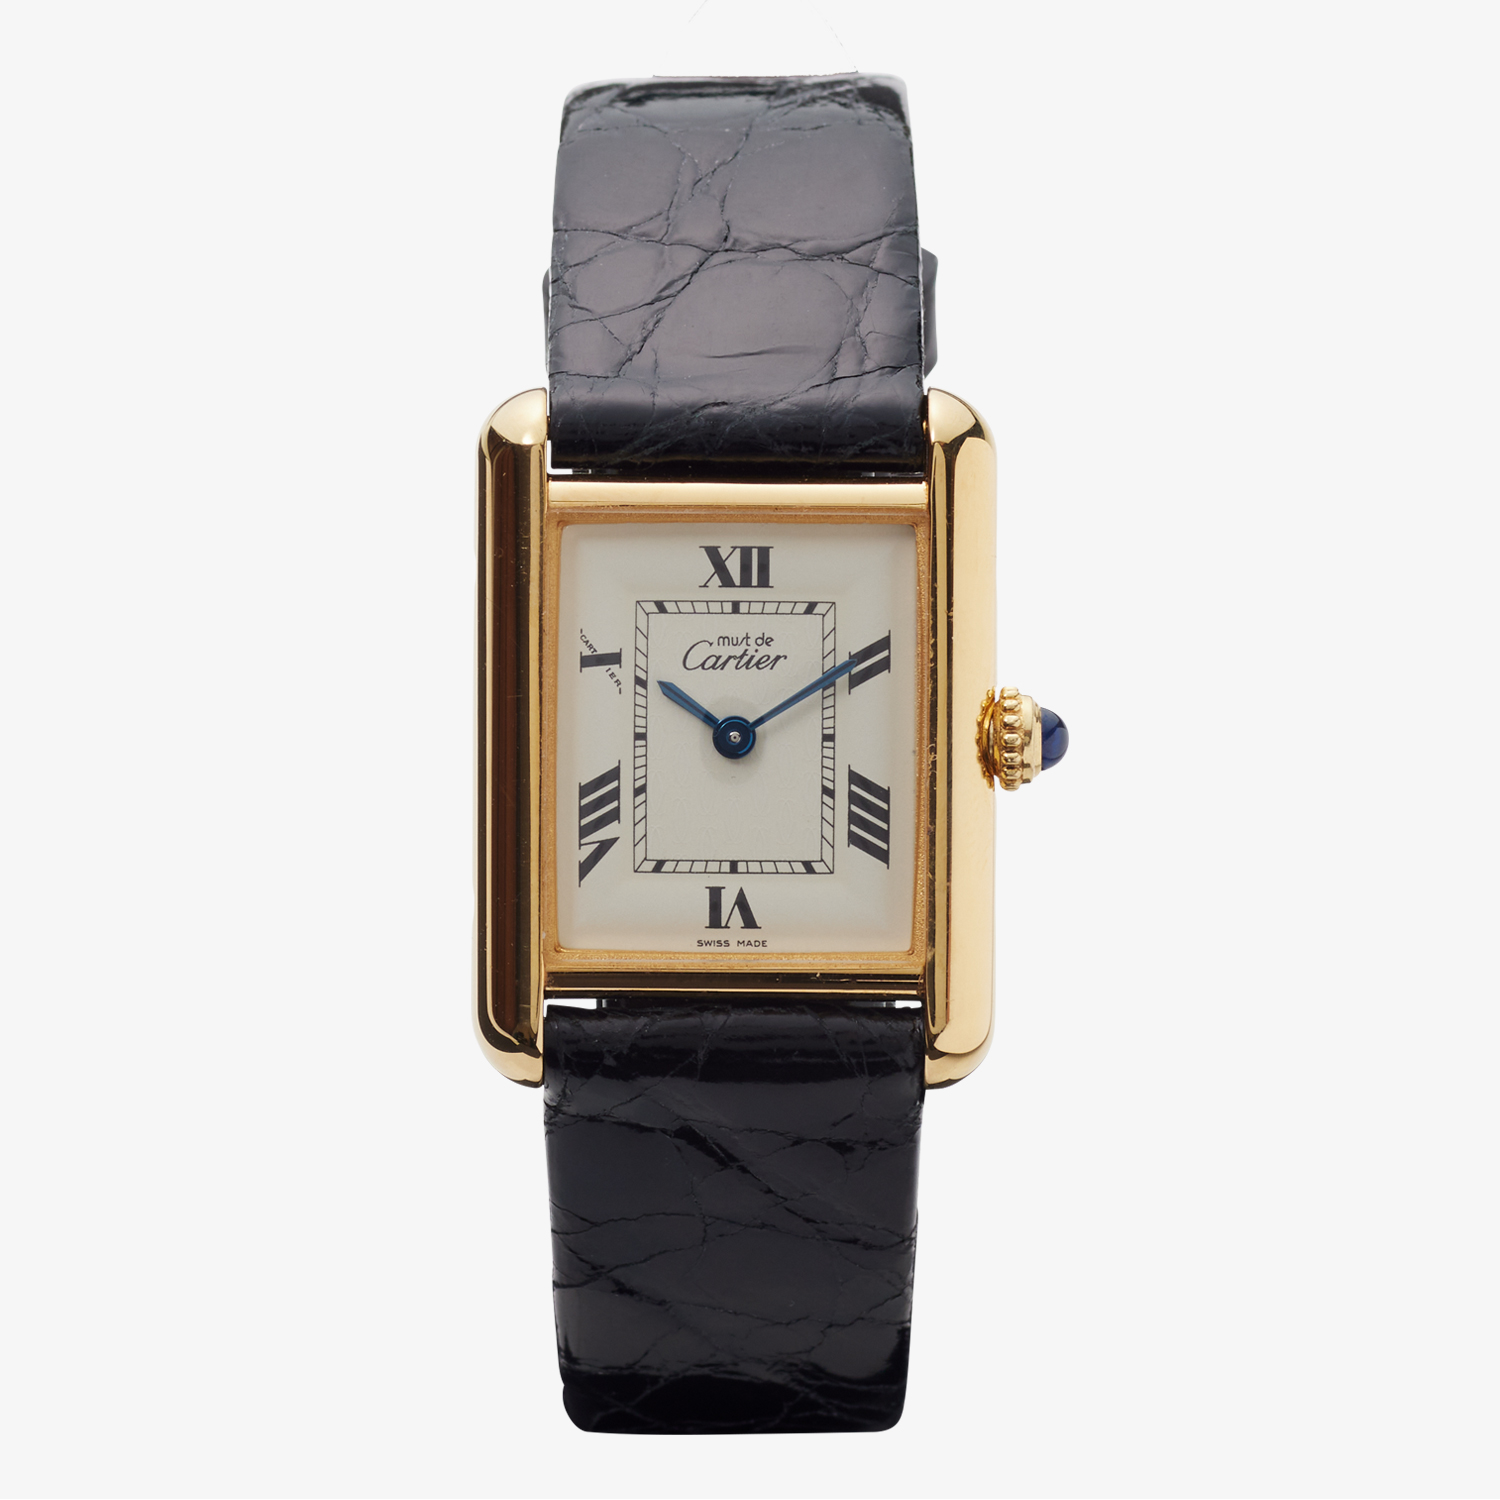 Cartier｜must de Cartier TANK MM｜Six Point Roman Dial｜White - 90's｜Cartier (Vintage Watch)